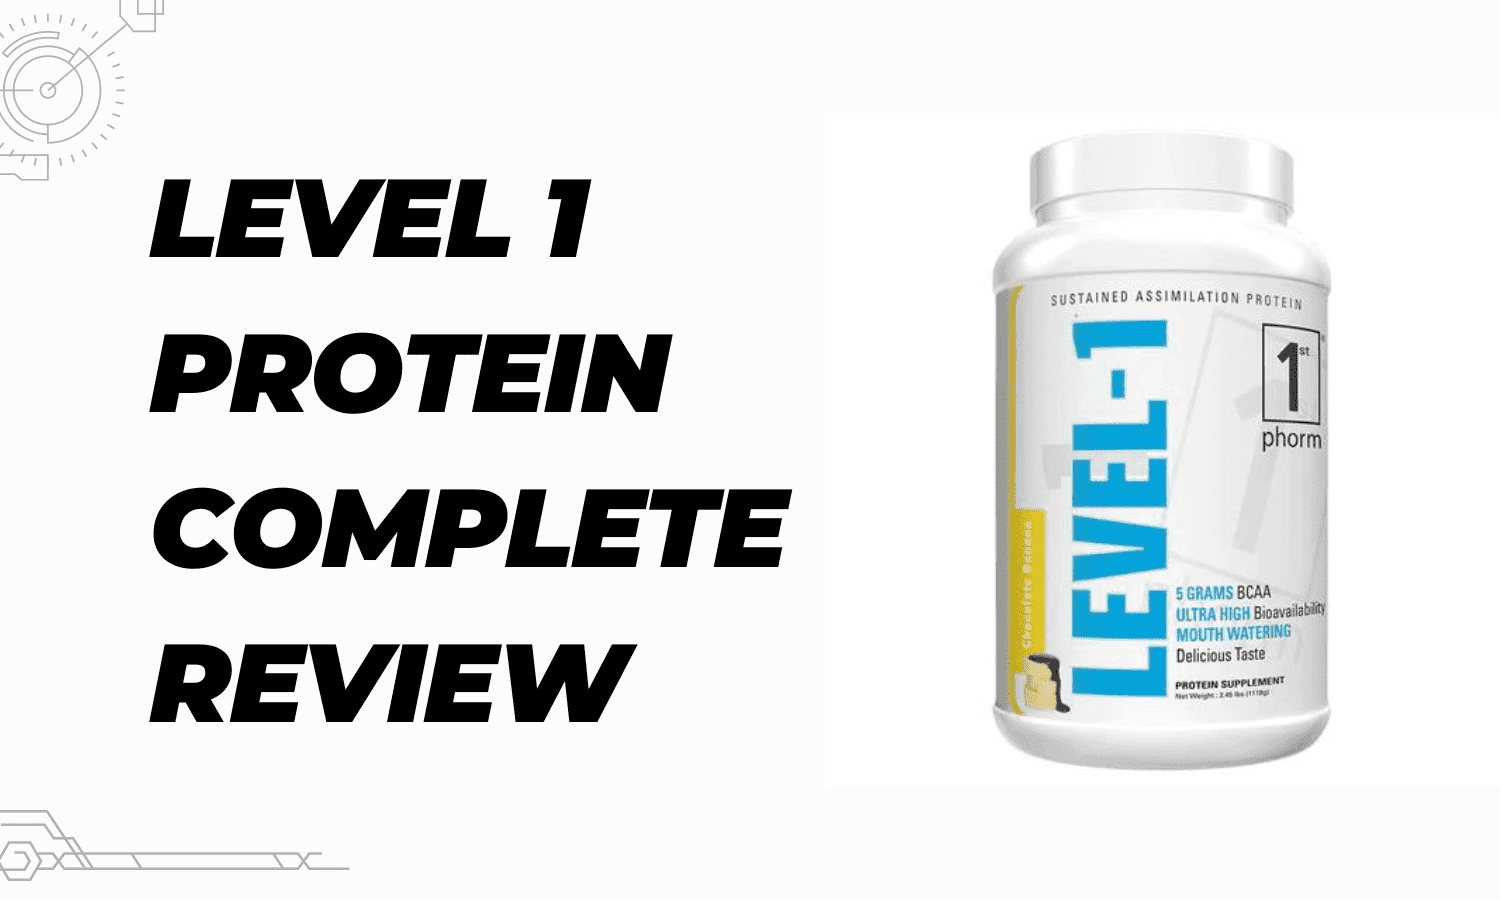 Level 1 Protein